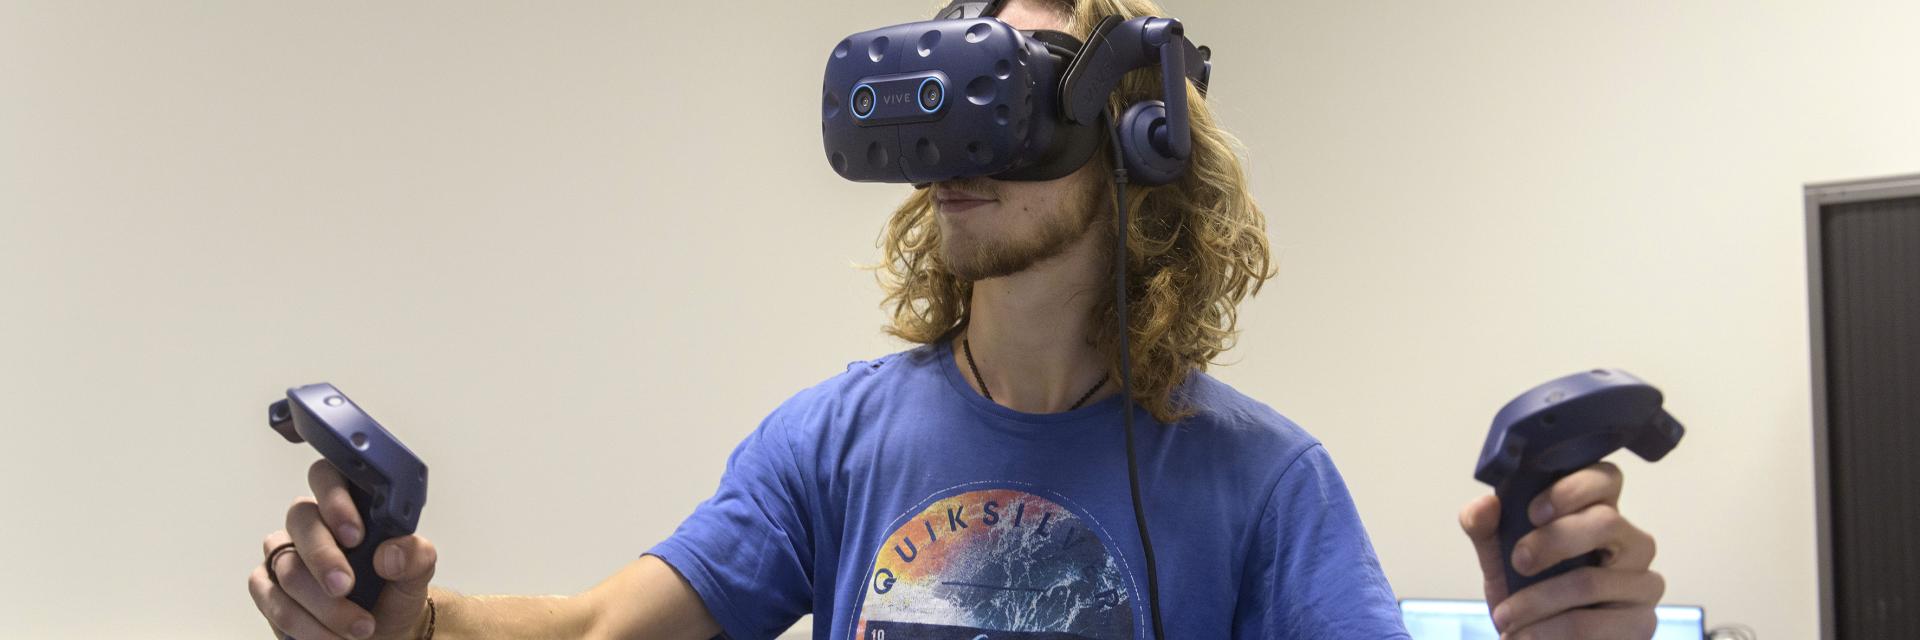 Media Design Lab - VR